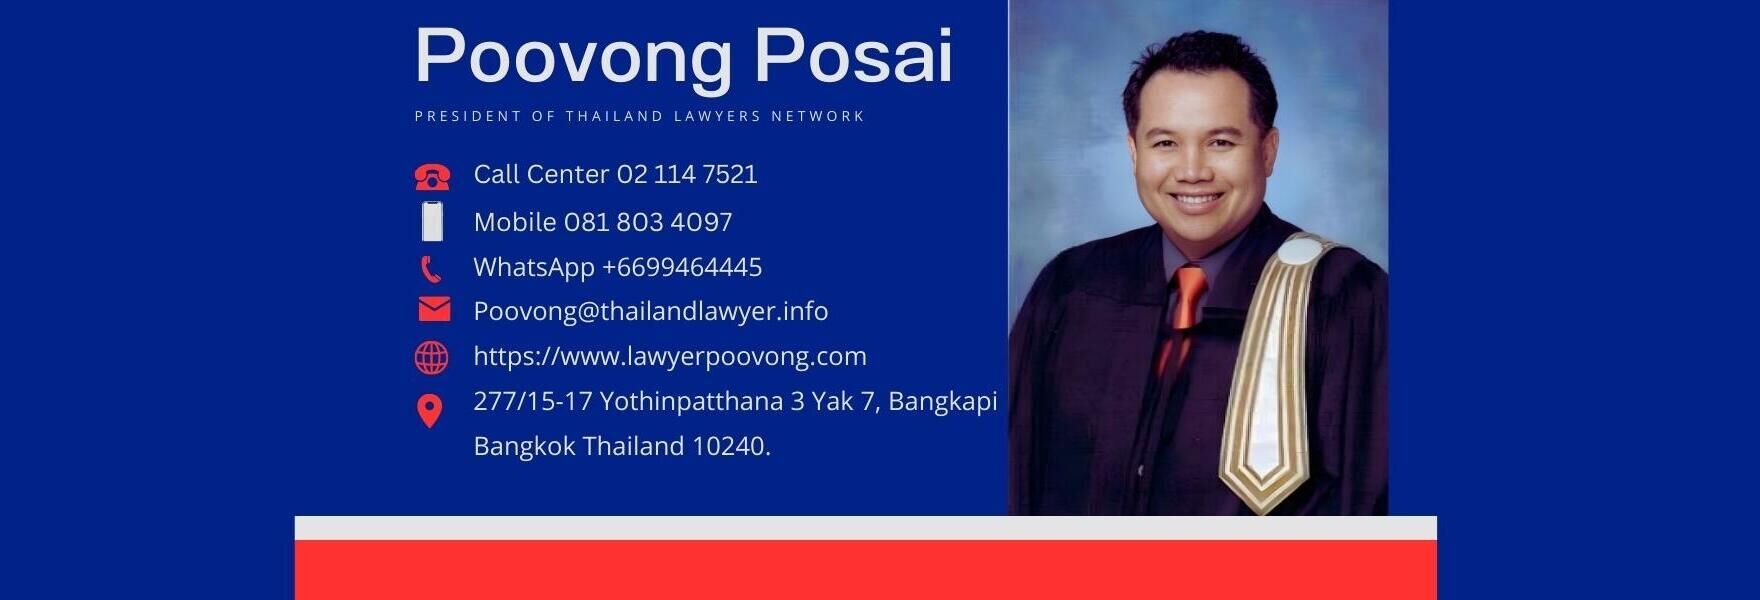 Thailand Lawyer Network